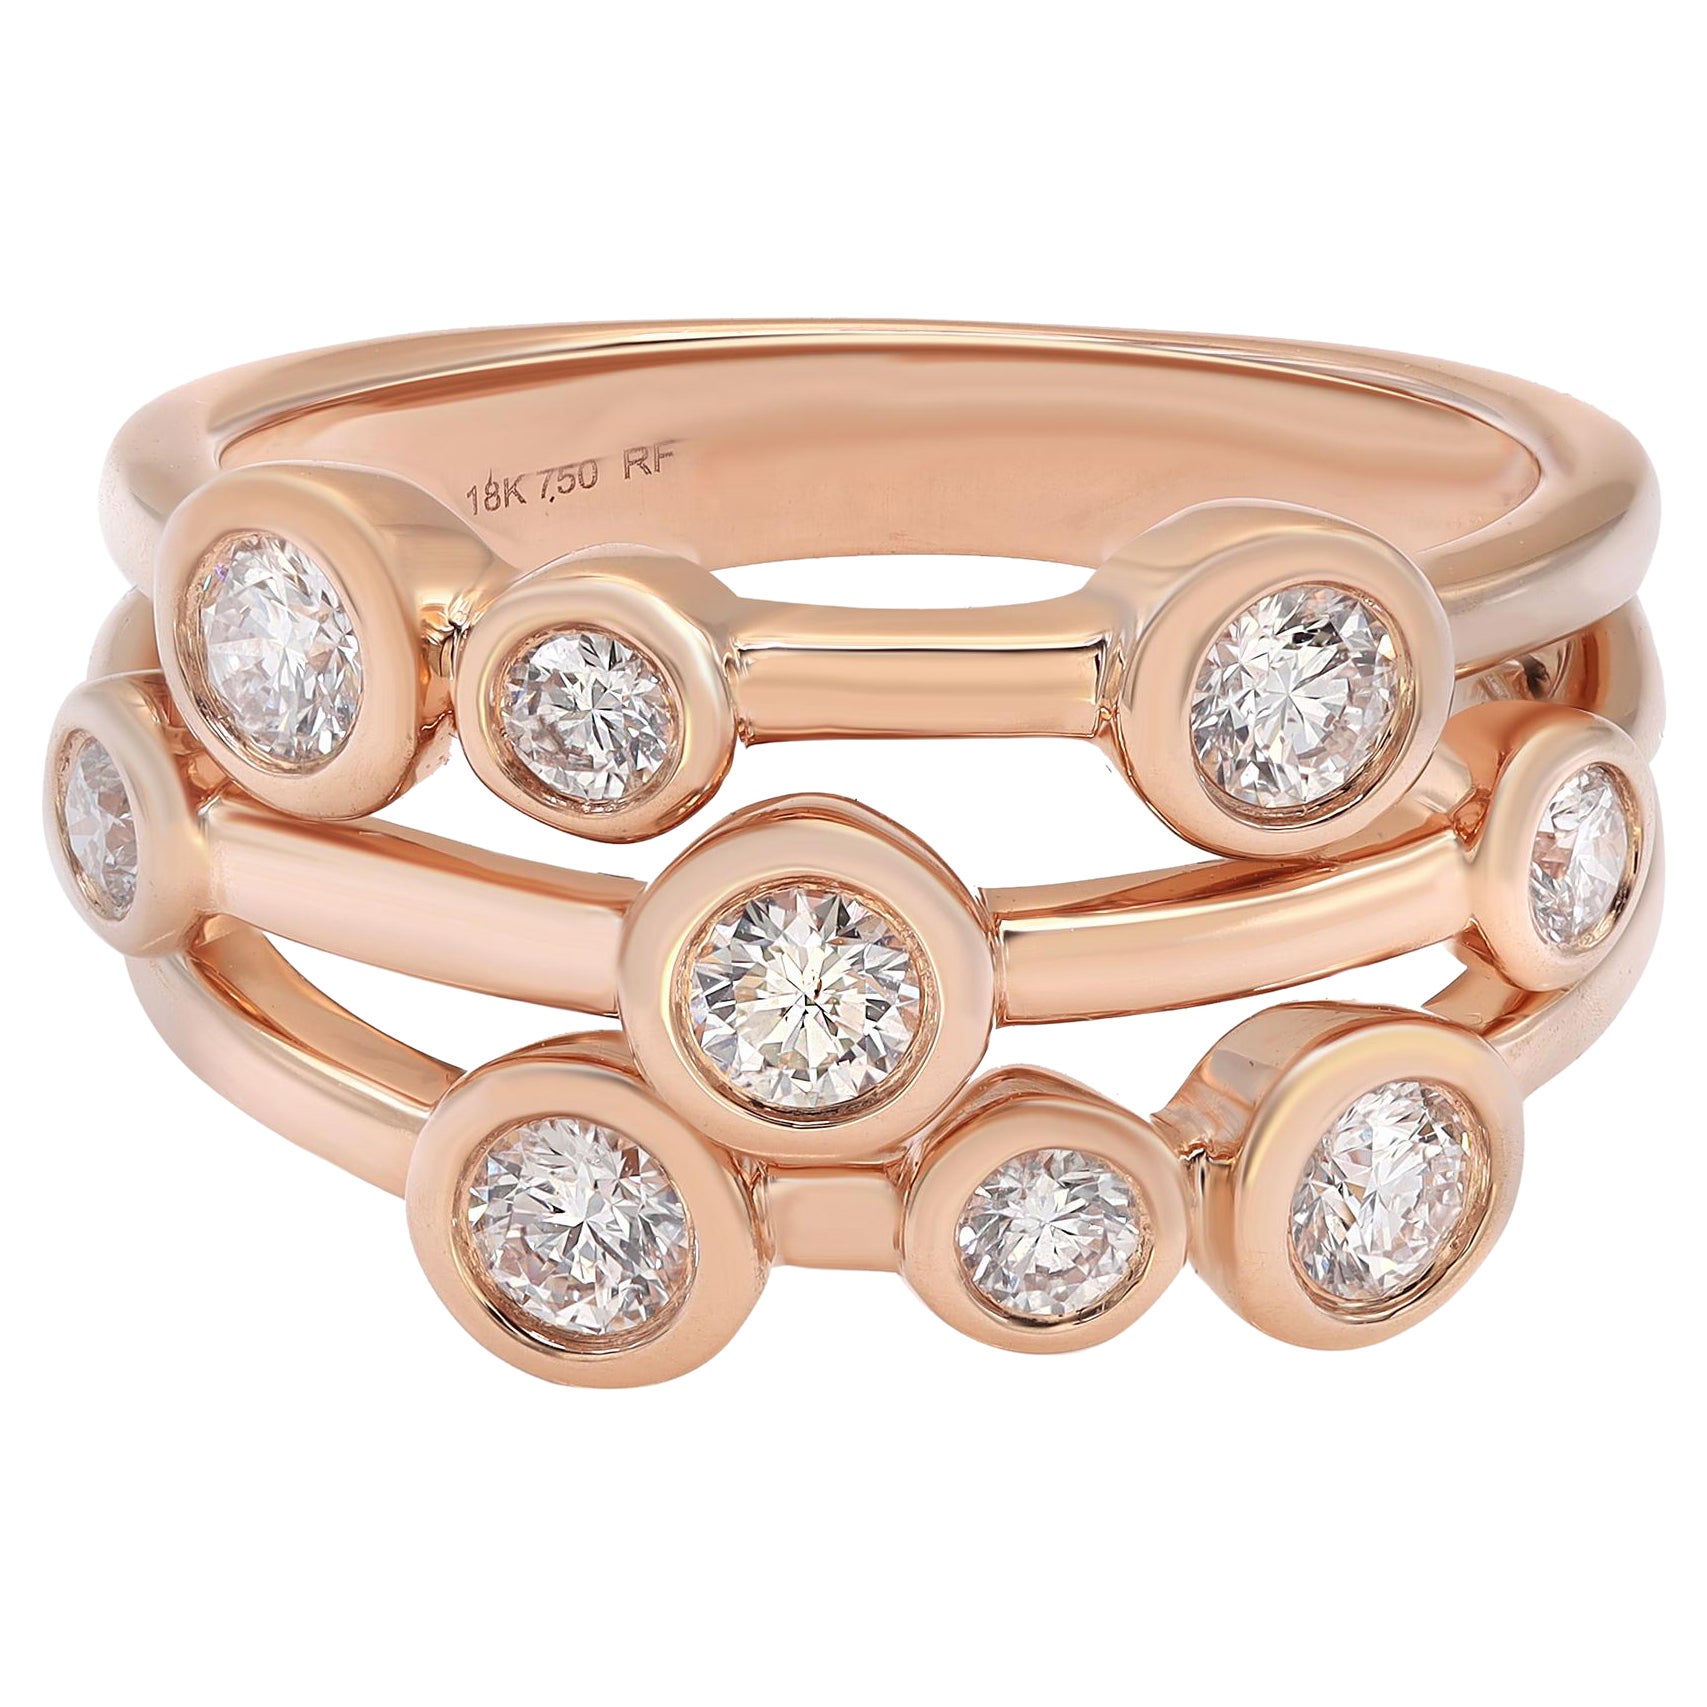 Rachel Koen Bezel Set Round Cut Diamond Fancy Ring 18k Rose Gold 0.68cttw